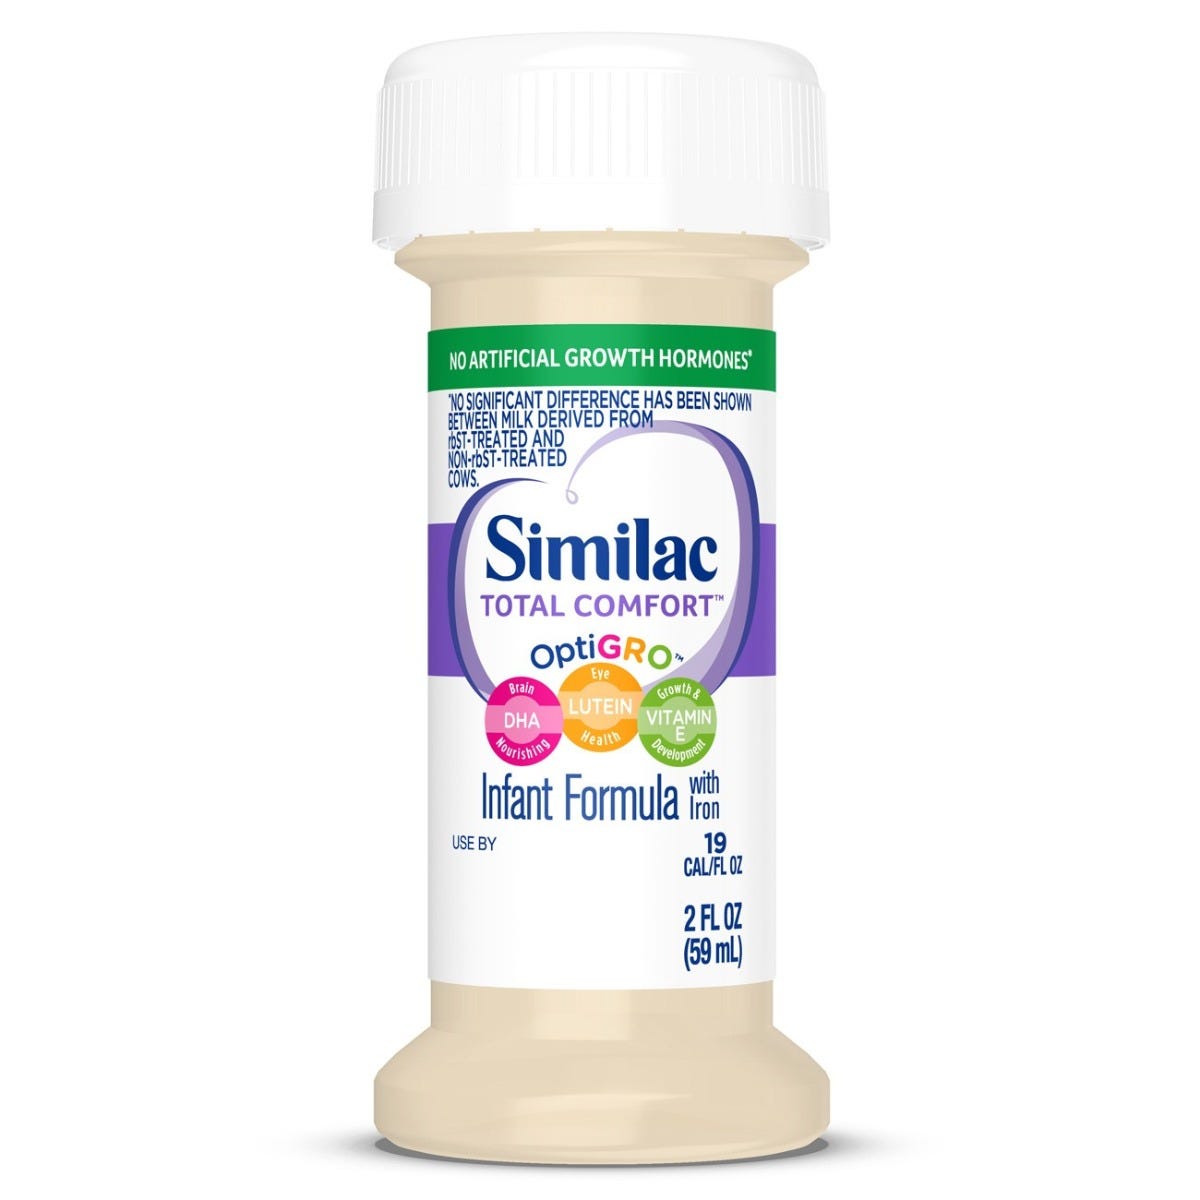 Similac Total Comfort ReadytoFeed / 2 fl oz bottle